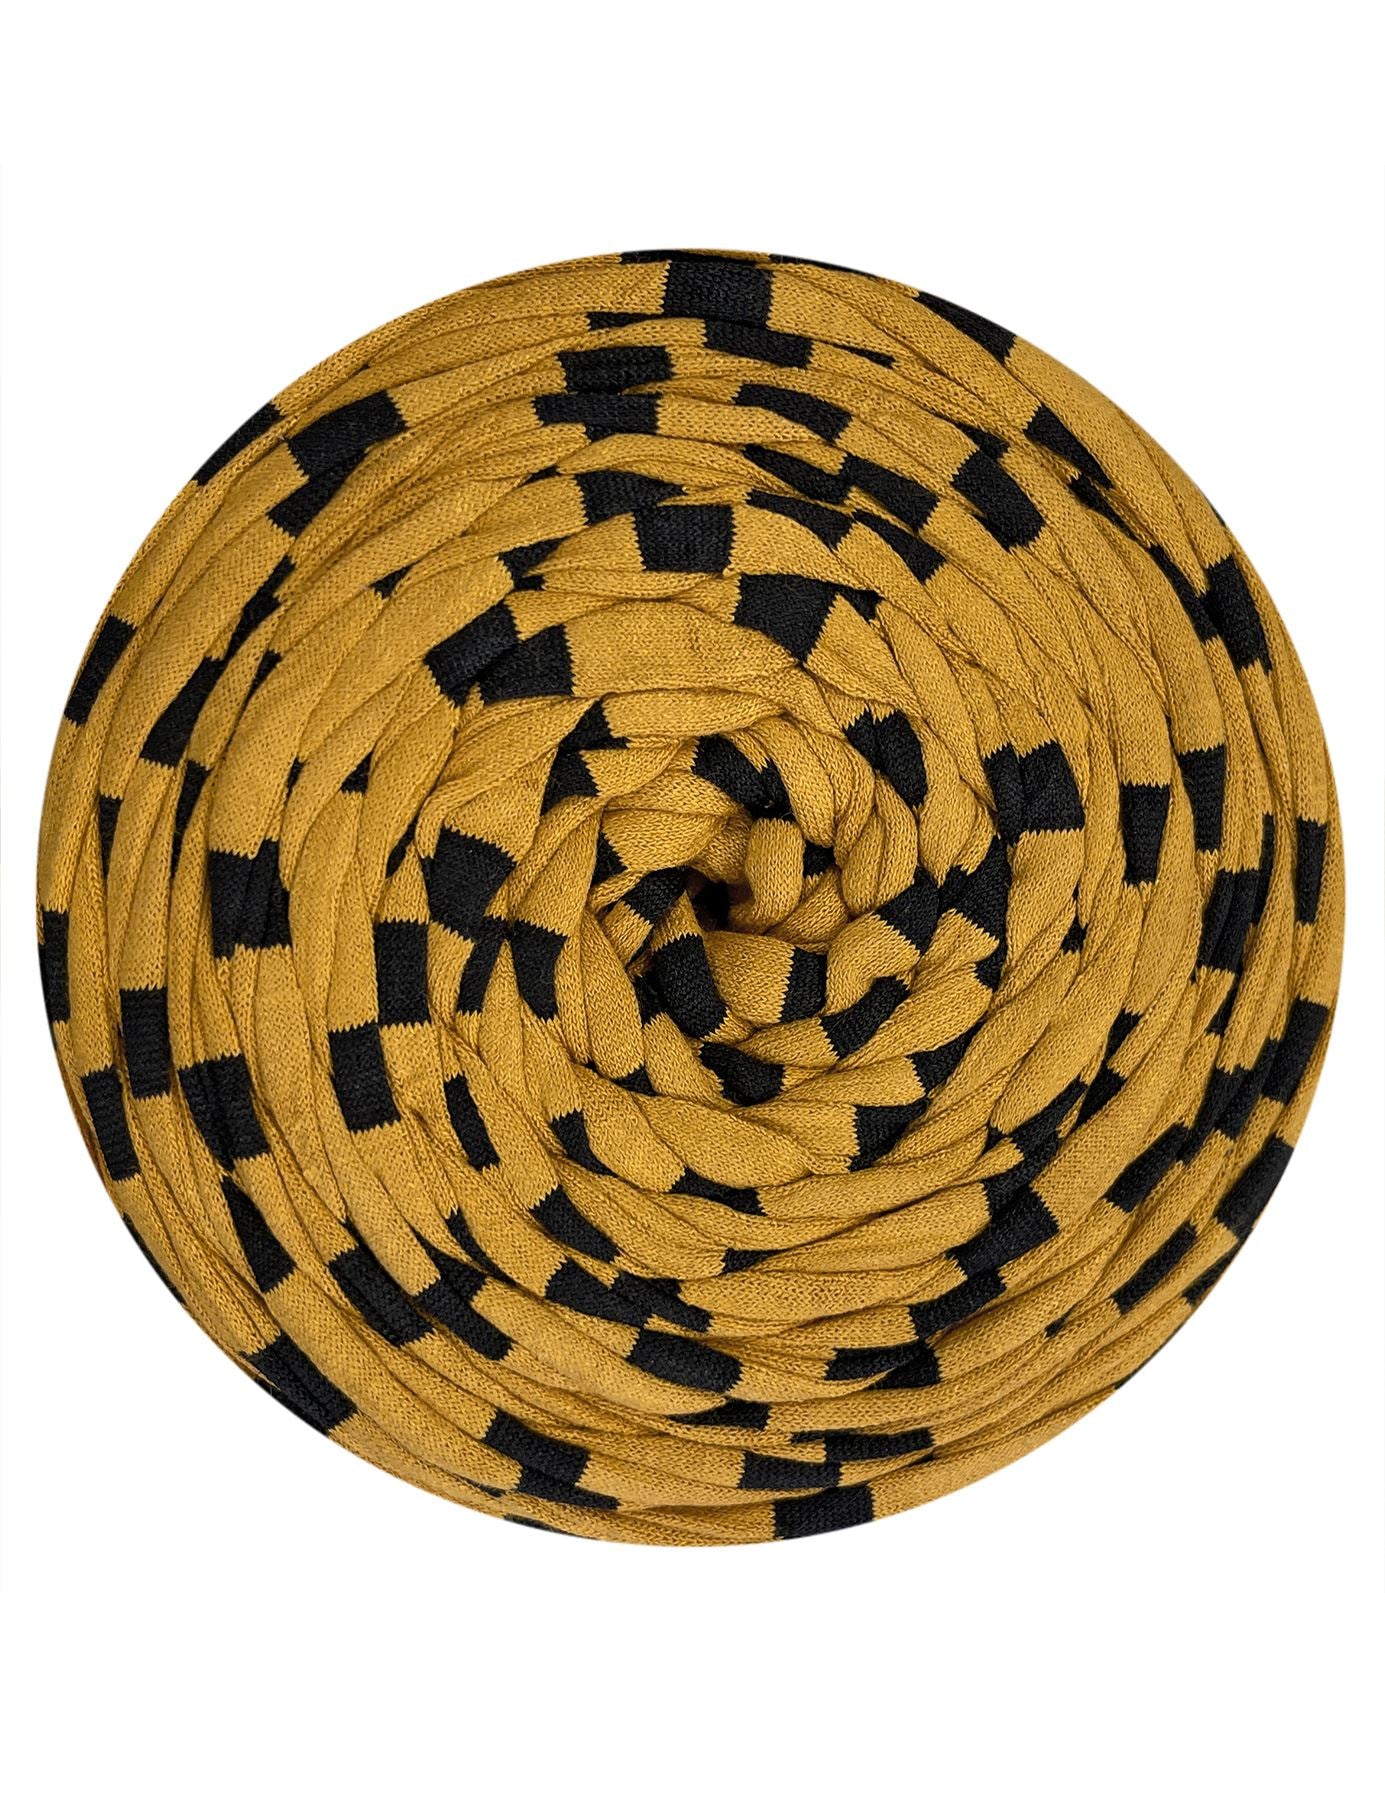 Mustard with black stripes t-shirt yarn (100-120m)